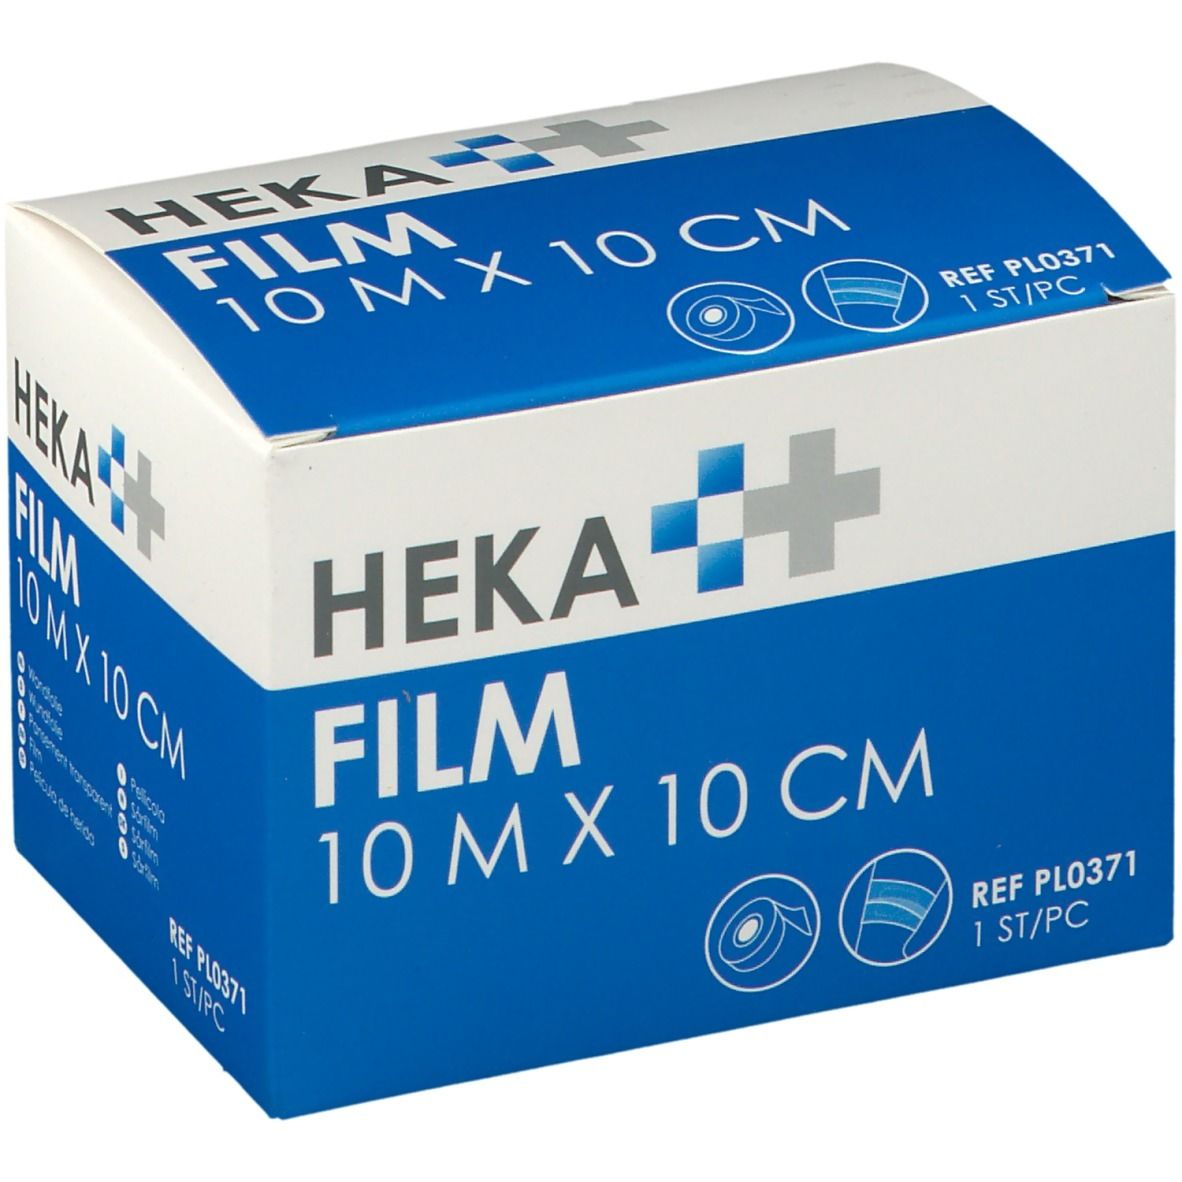 Heka Film 10 m x 10 cm